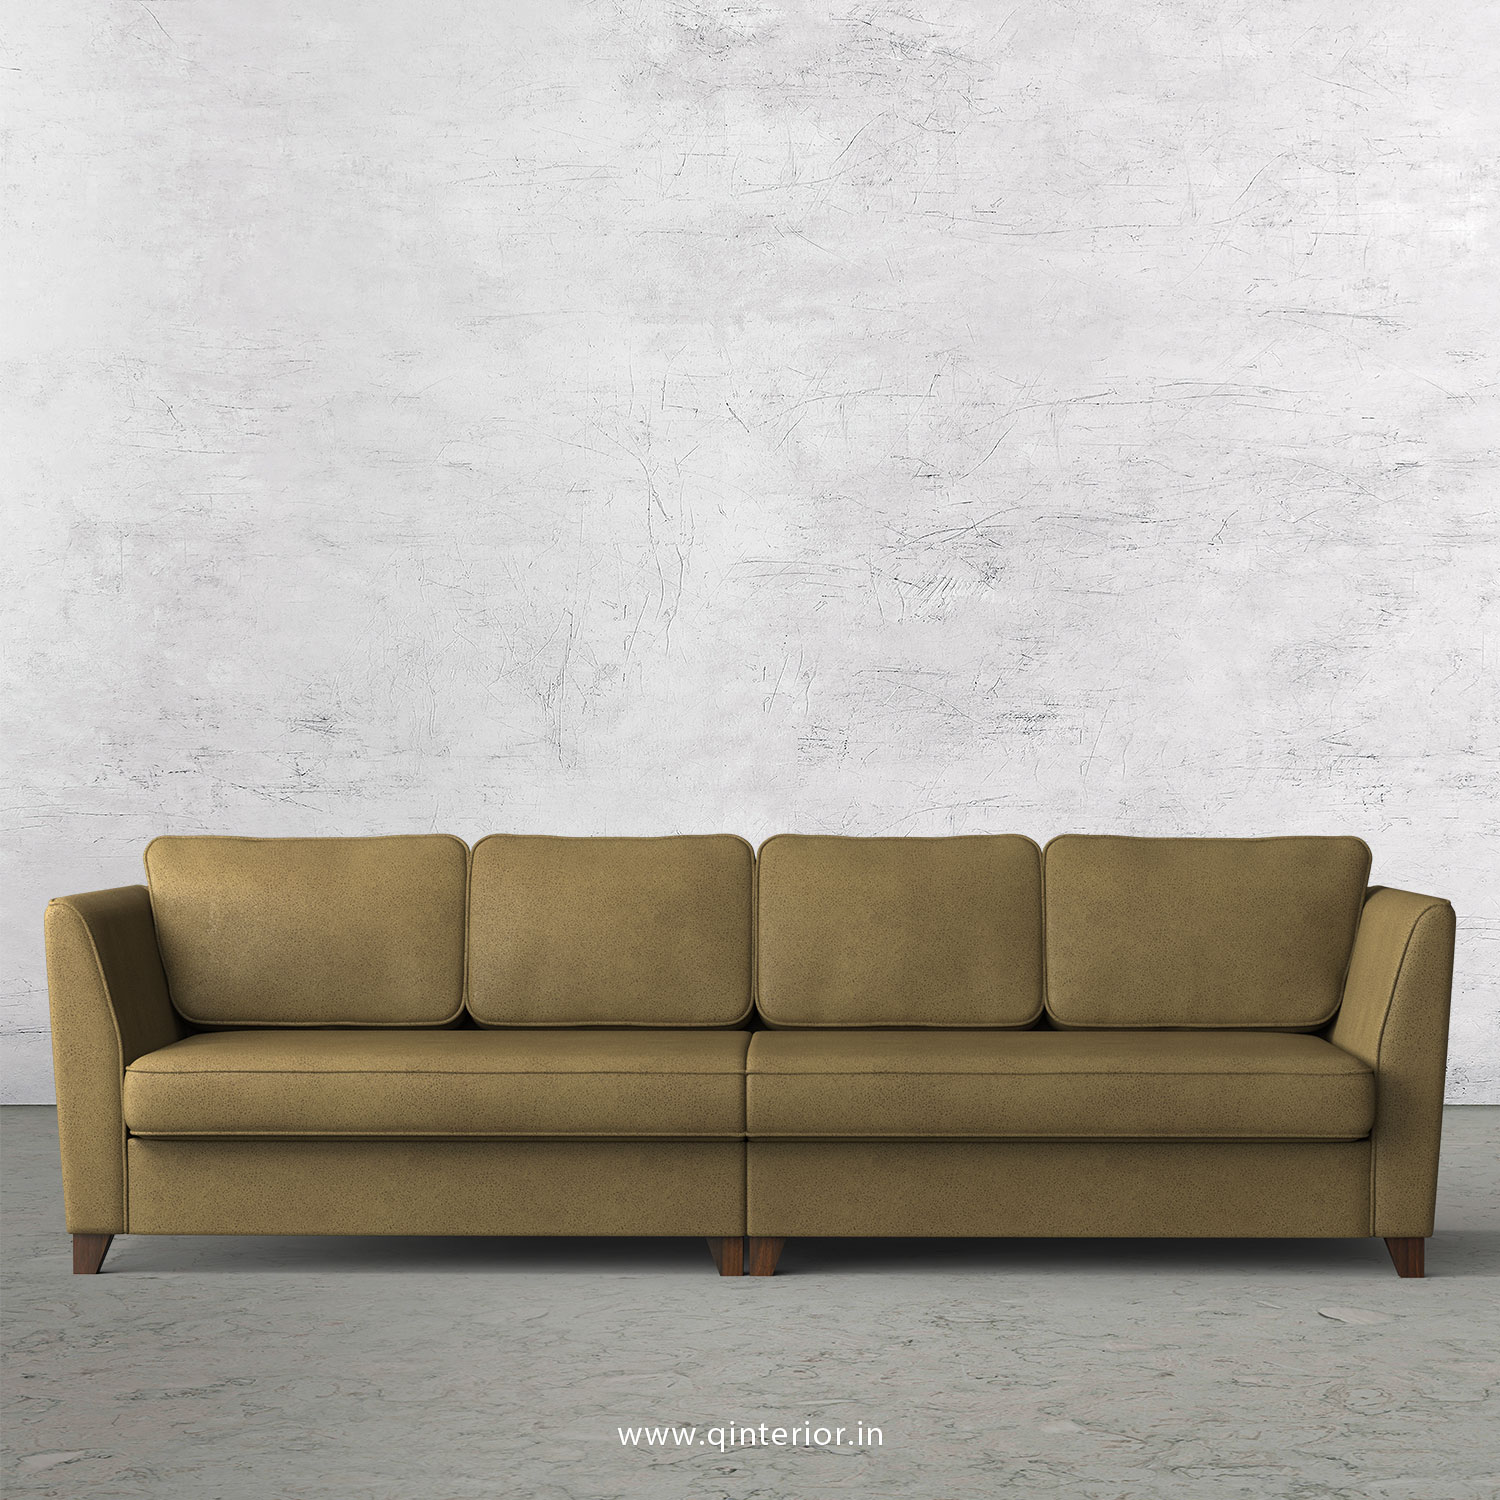 Kingstone 4 Seater Sofa in Fab Leather Fabric - SFA004 FL01